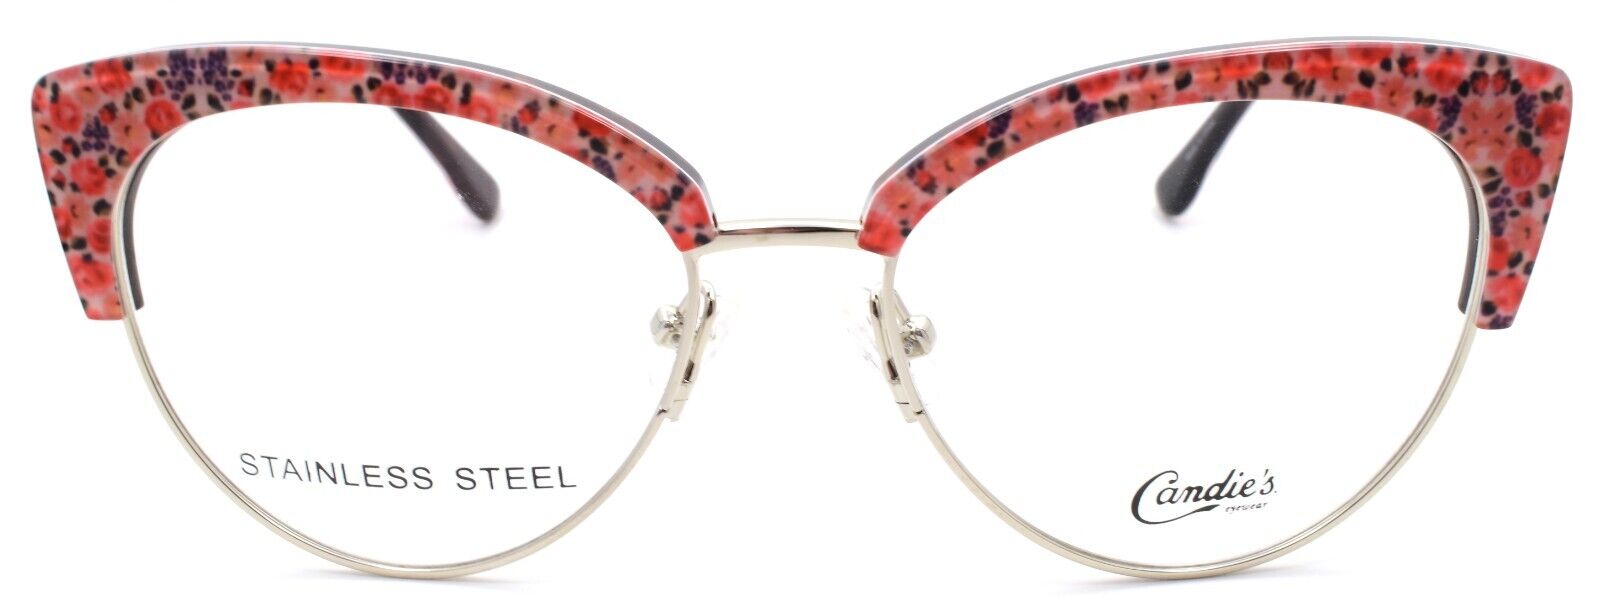 2-Candies CA0172 074 Women's Eyeglasses Frames Cat Eye 51-16-140 Pink / Silver-889214071507-IKSpecs